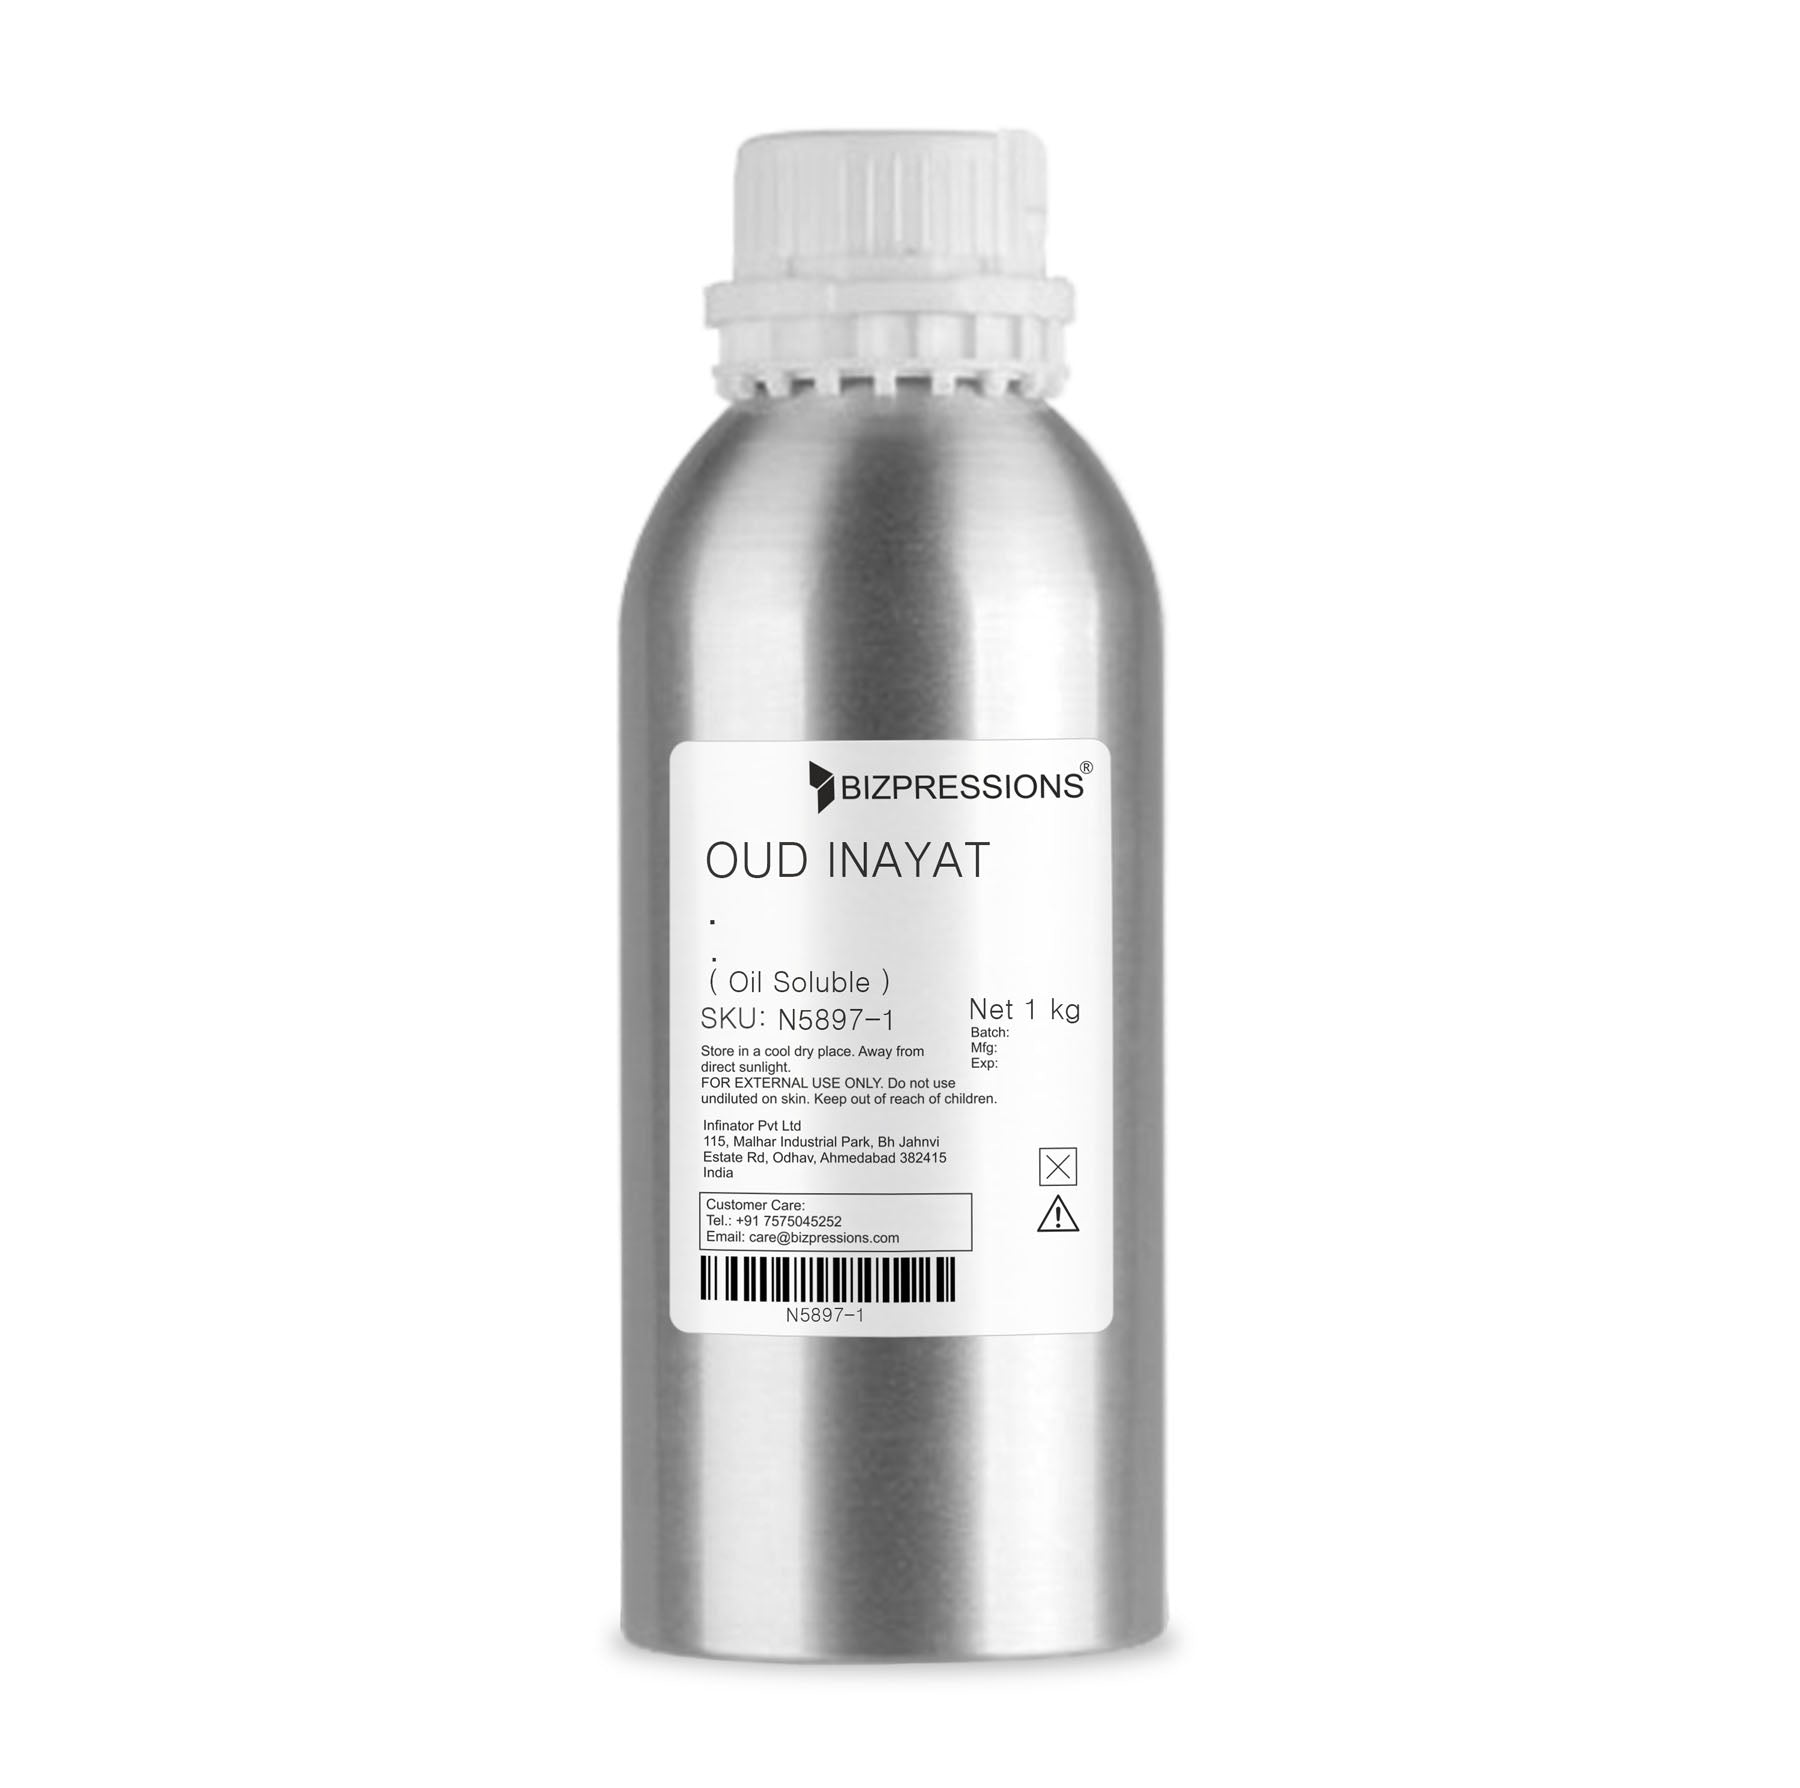 OUD INAYAT - Fragrance ( Oil Soluble ) - 1 kg